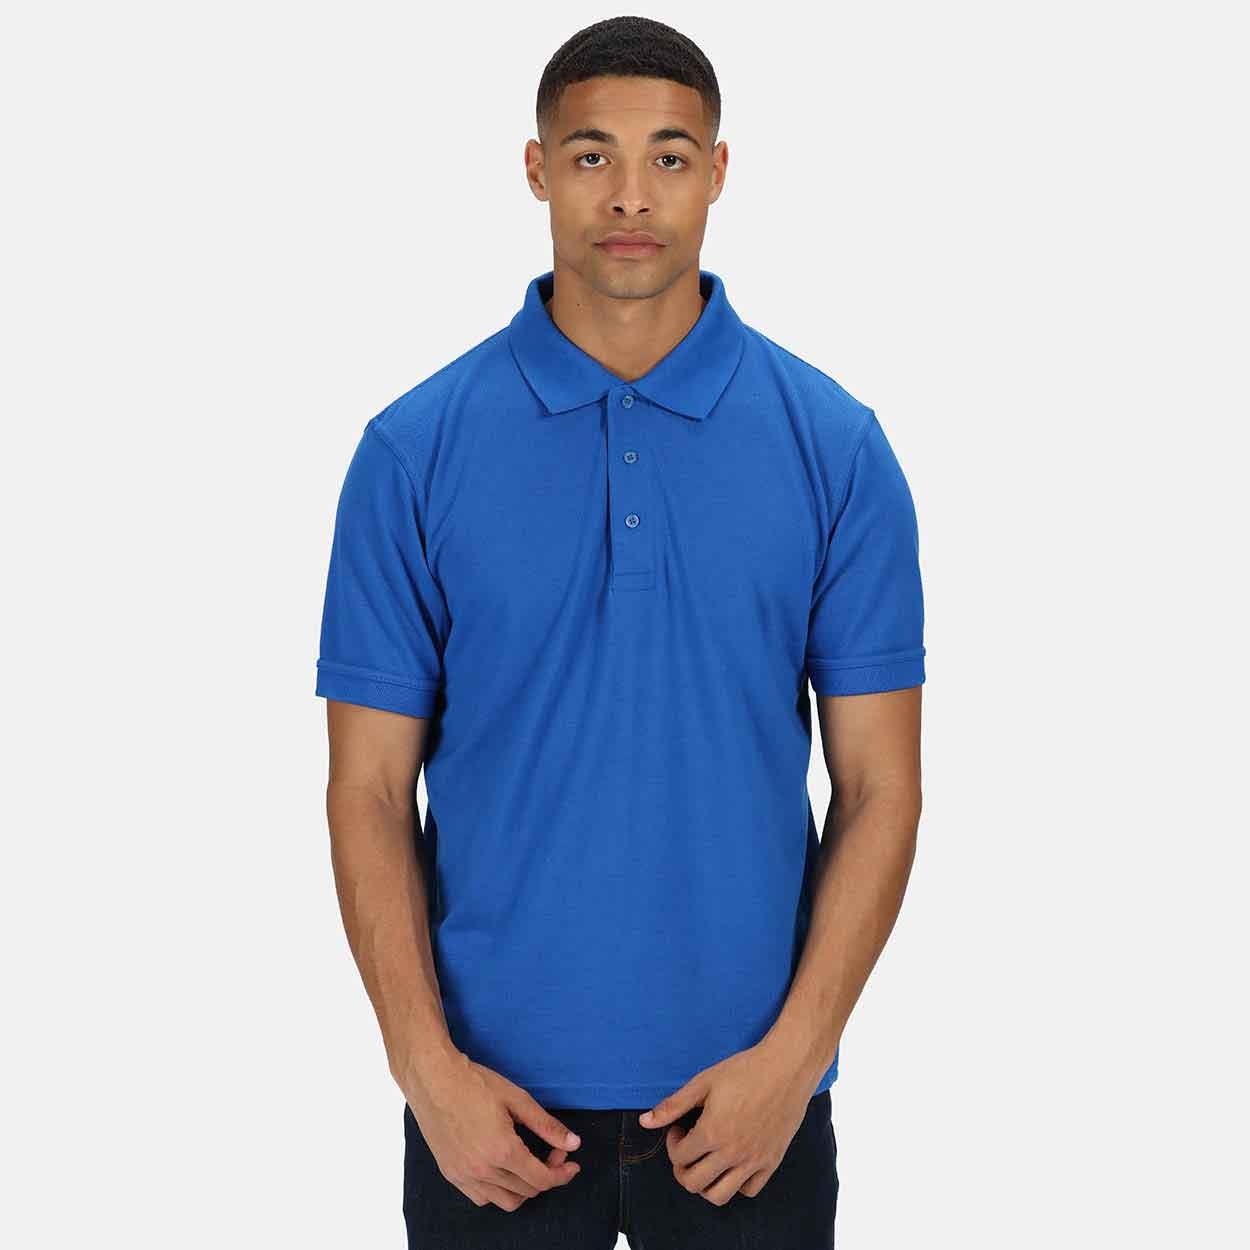 Regatta Professional TRS143 Cotton Polo Shirt - Plain Poly Cotton Polo  Shirts - PolyCotton Polo Shirts - Mens Polo Shirts - Polo Shirts -  Leisurewear - Best Workwear